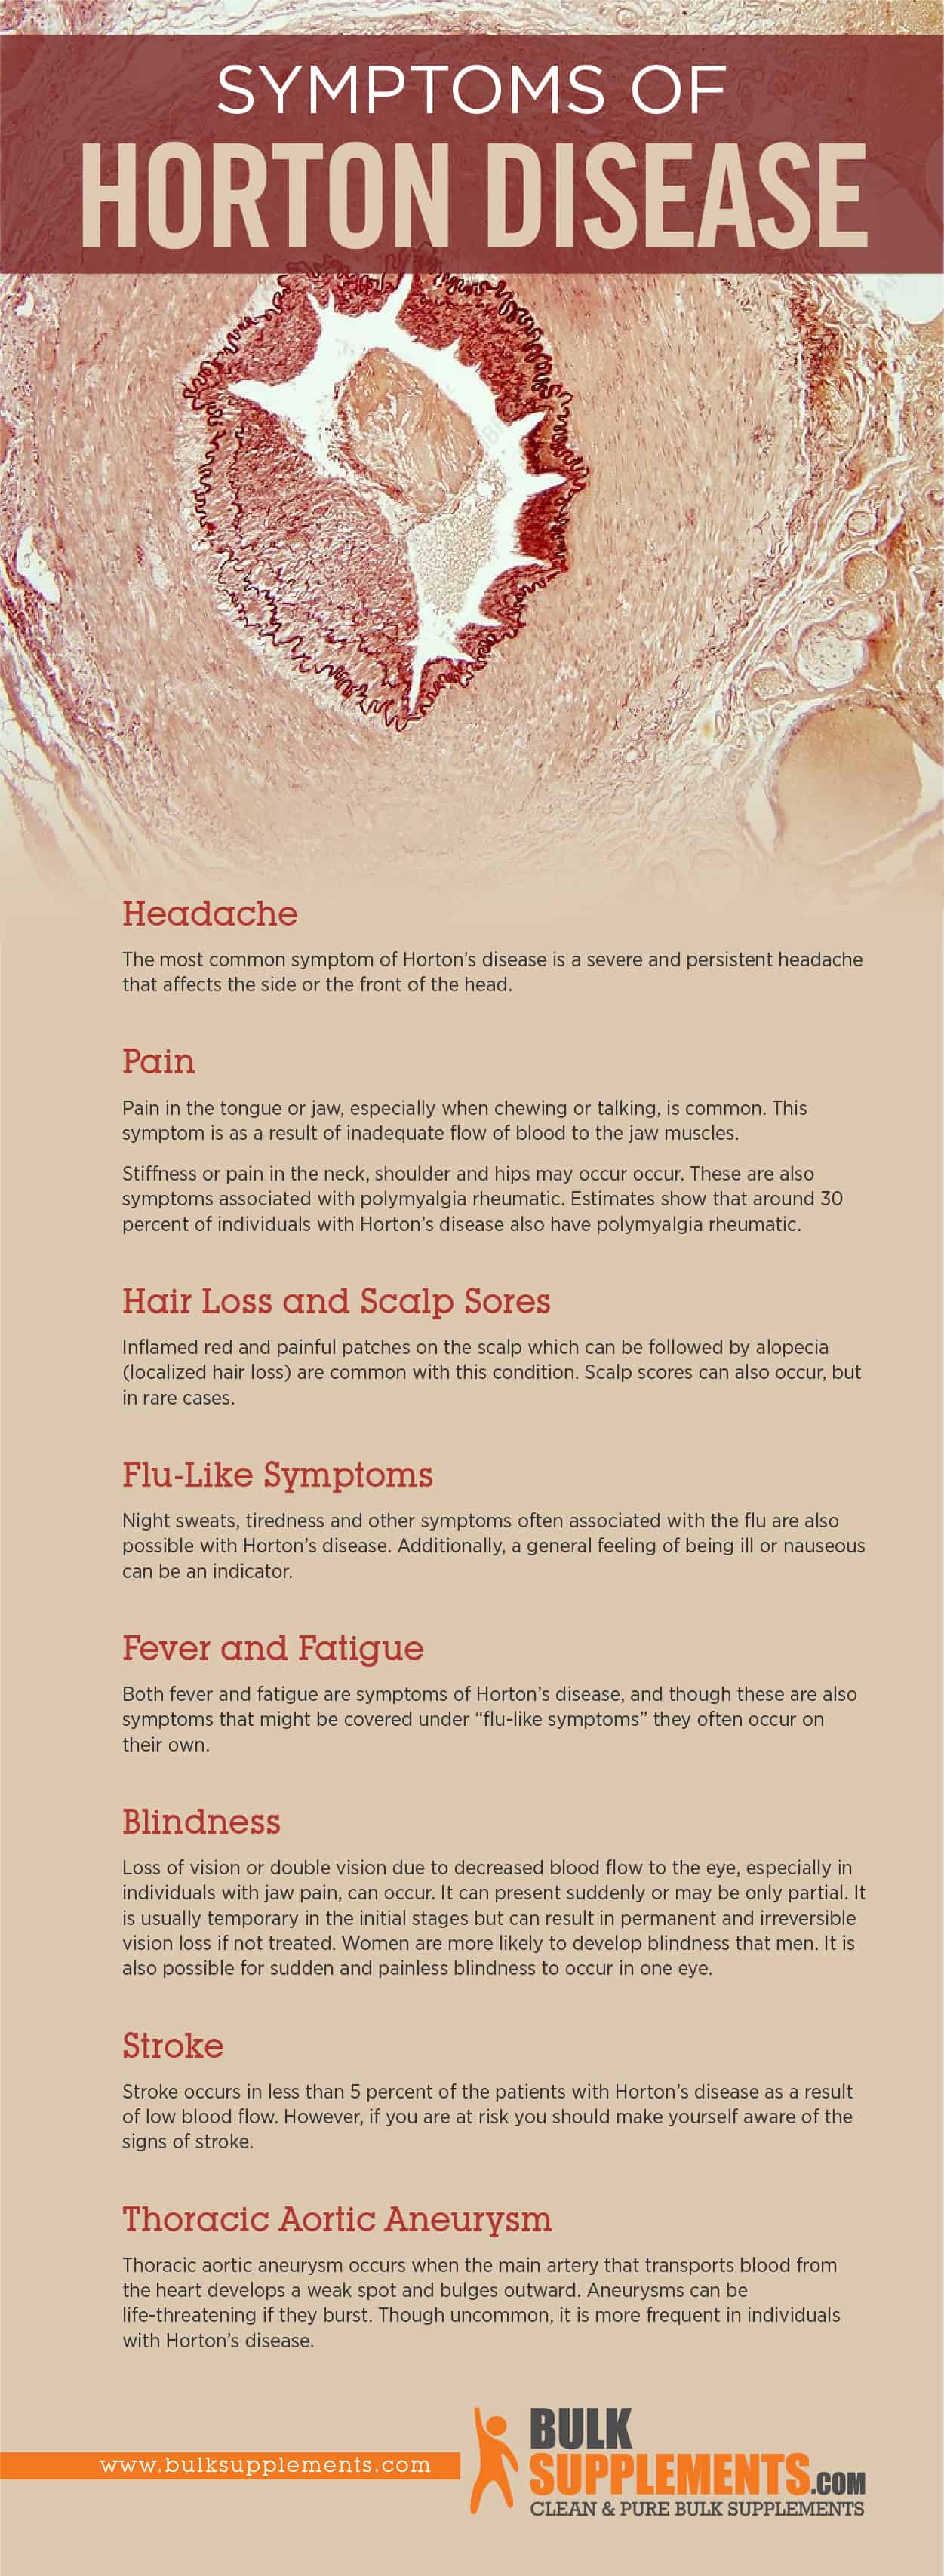 Symptoms of Horton Disease